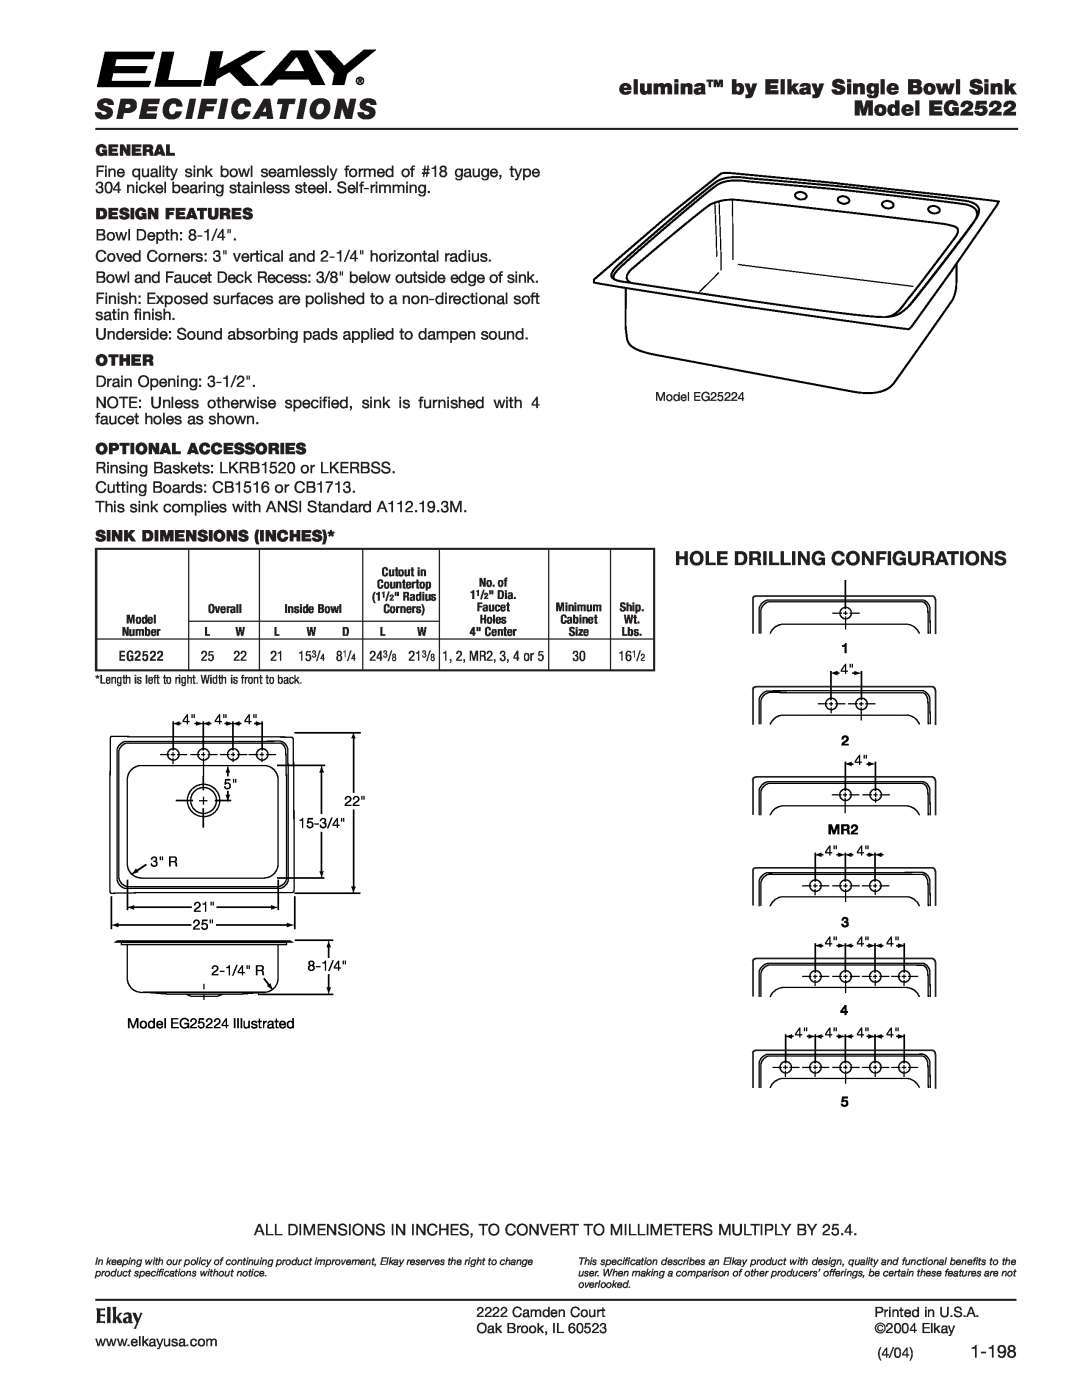 Elkay specifications Specifications, eluminaTM by Elkay Single Bowl Sink, Model EG2522, Hole Drilling Configurations 